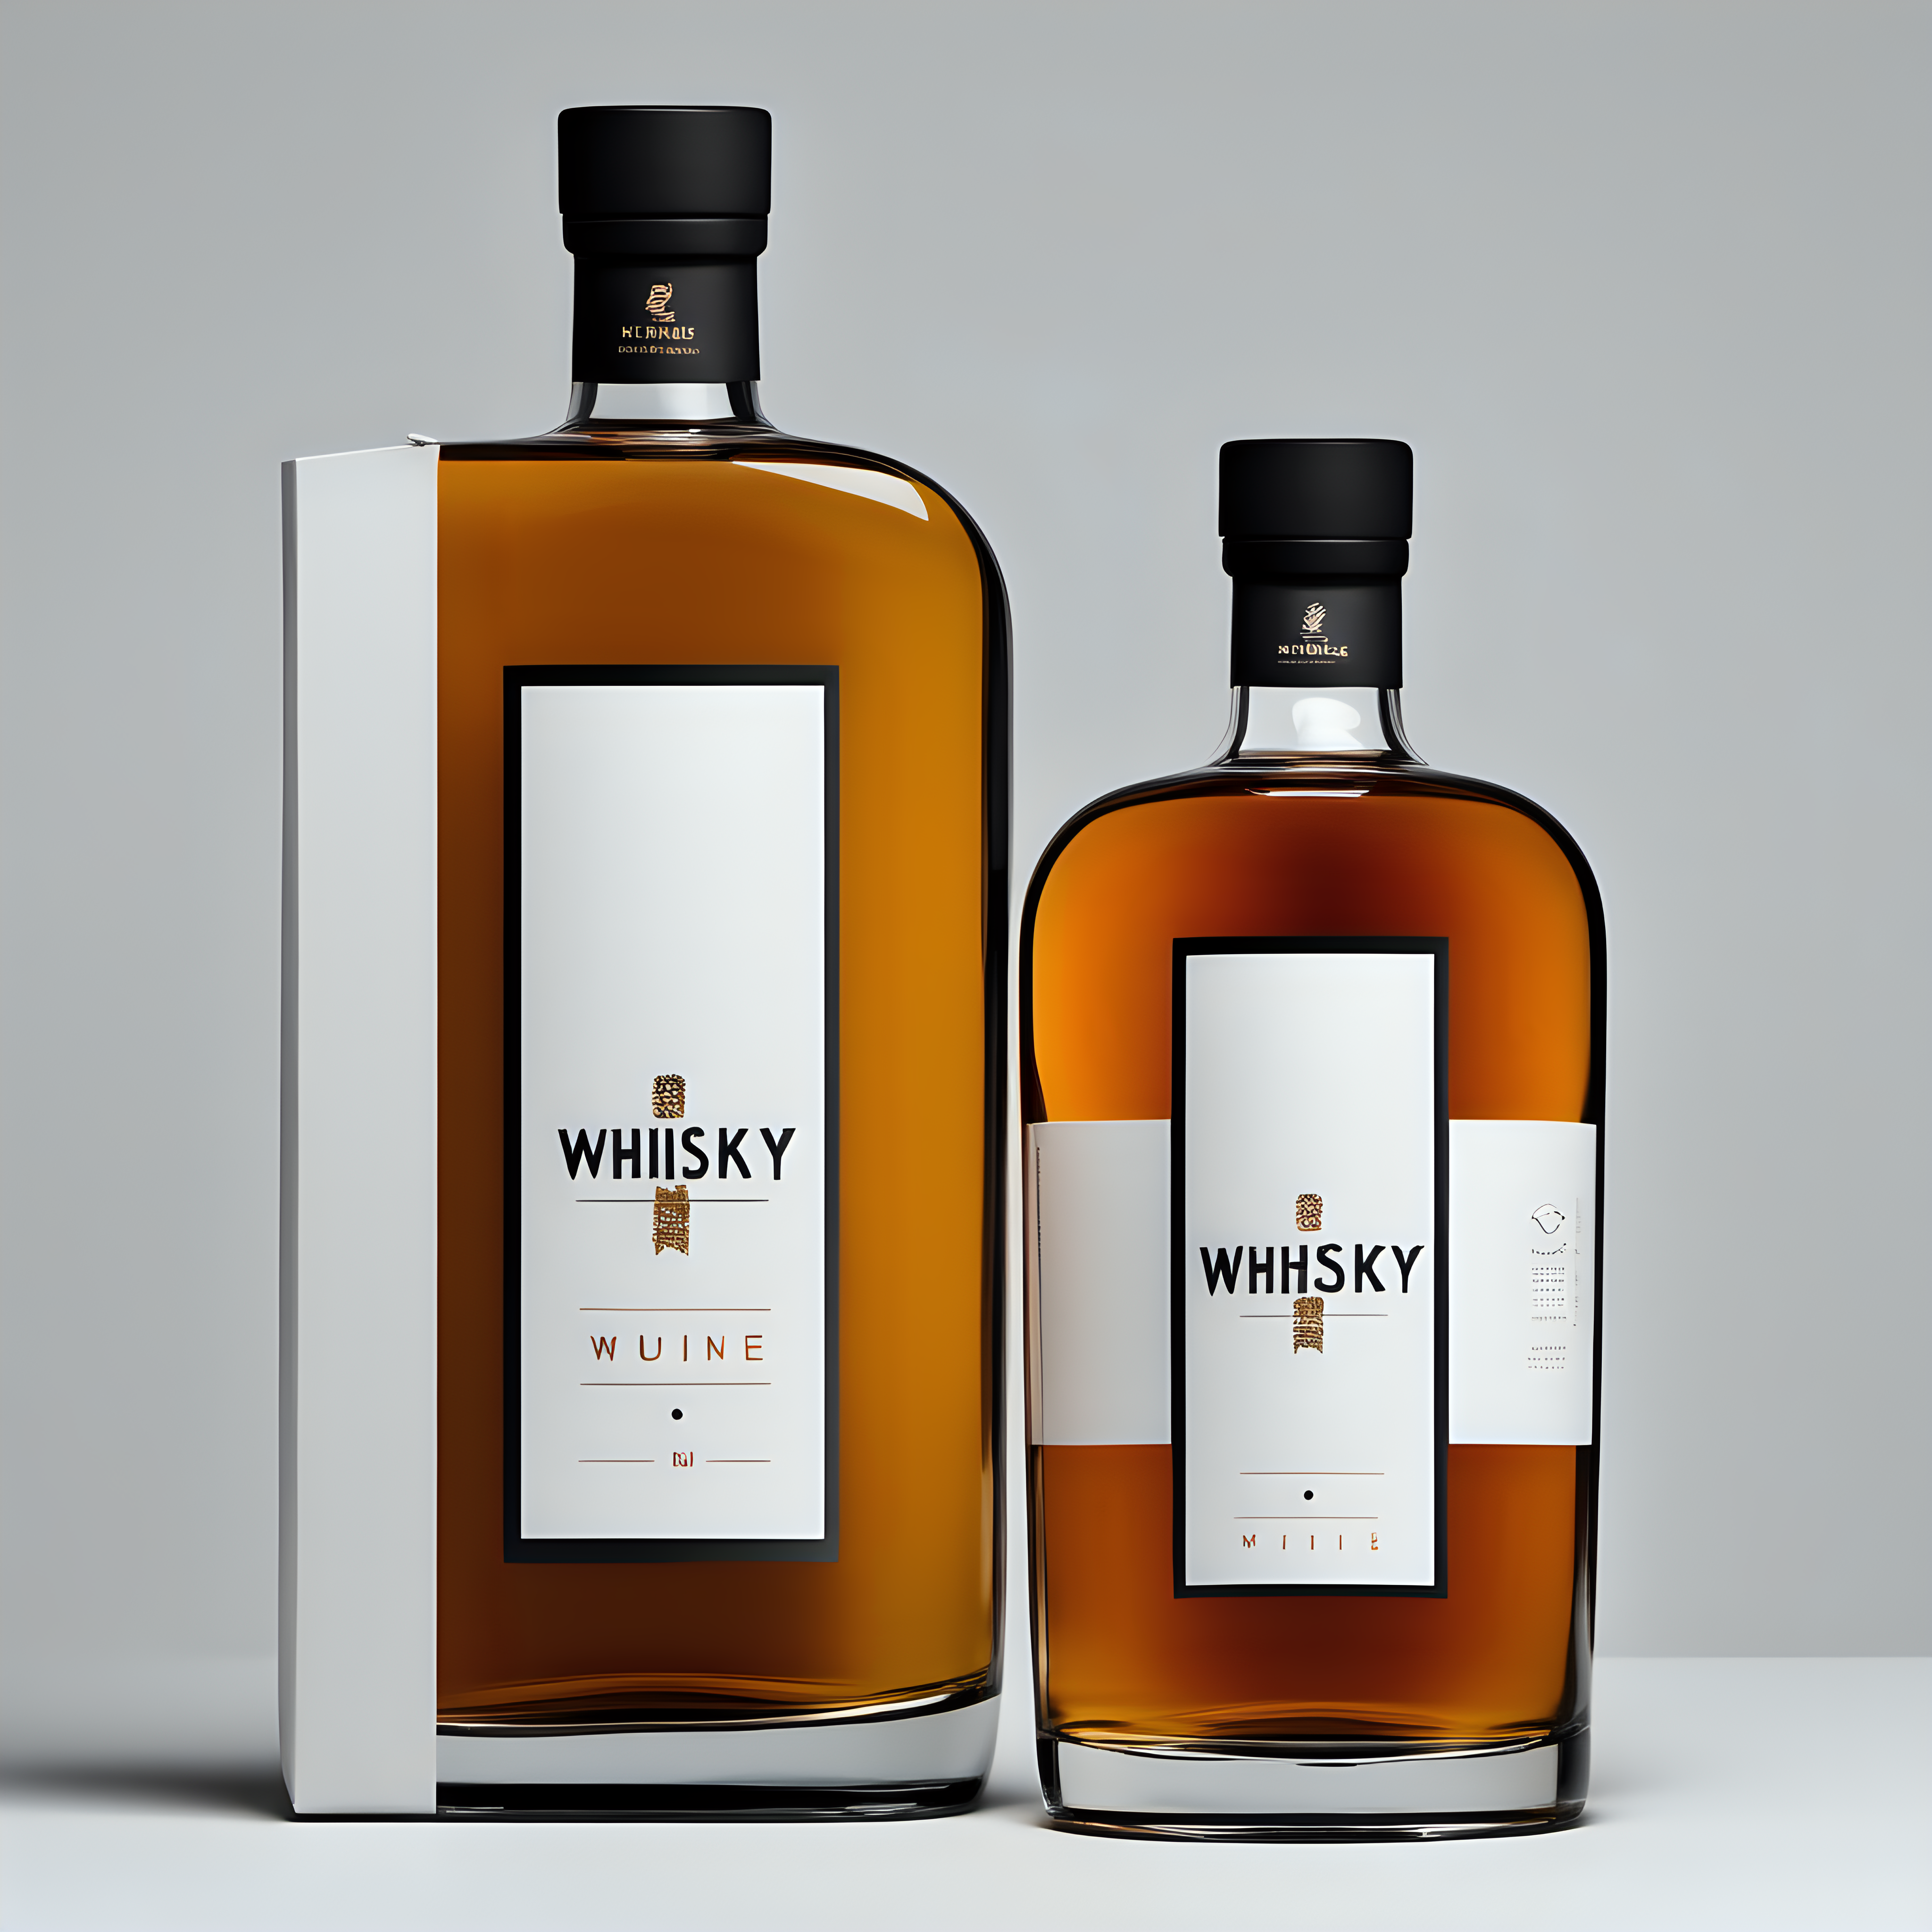 a minimalist modern whisky brand bottle